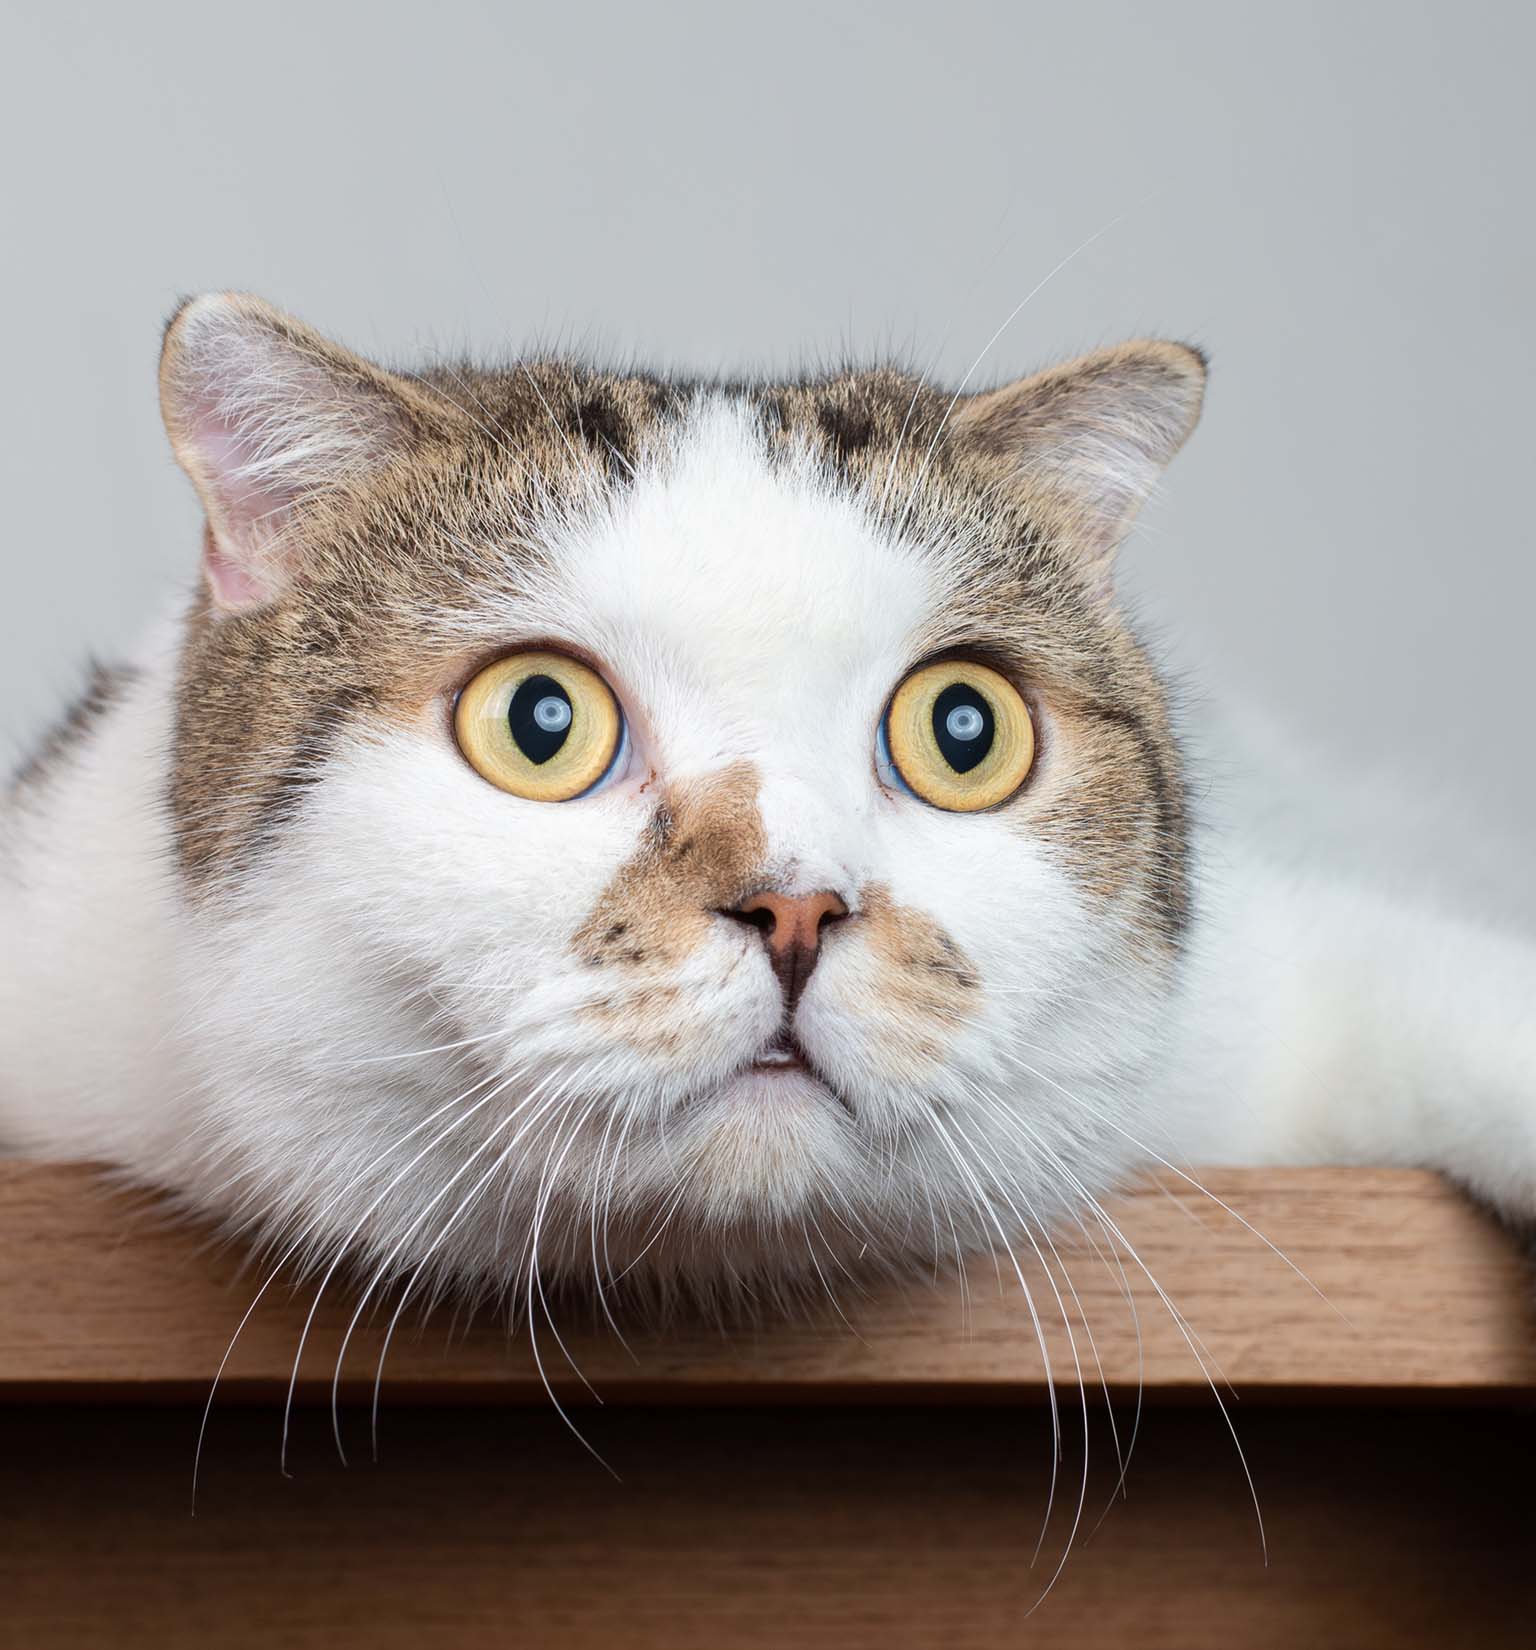 Entdeckt: Hauskatzen haben 276 verschiedene Gesichtsausdrücke